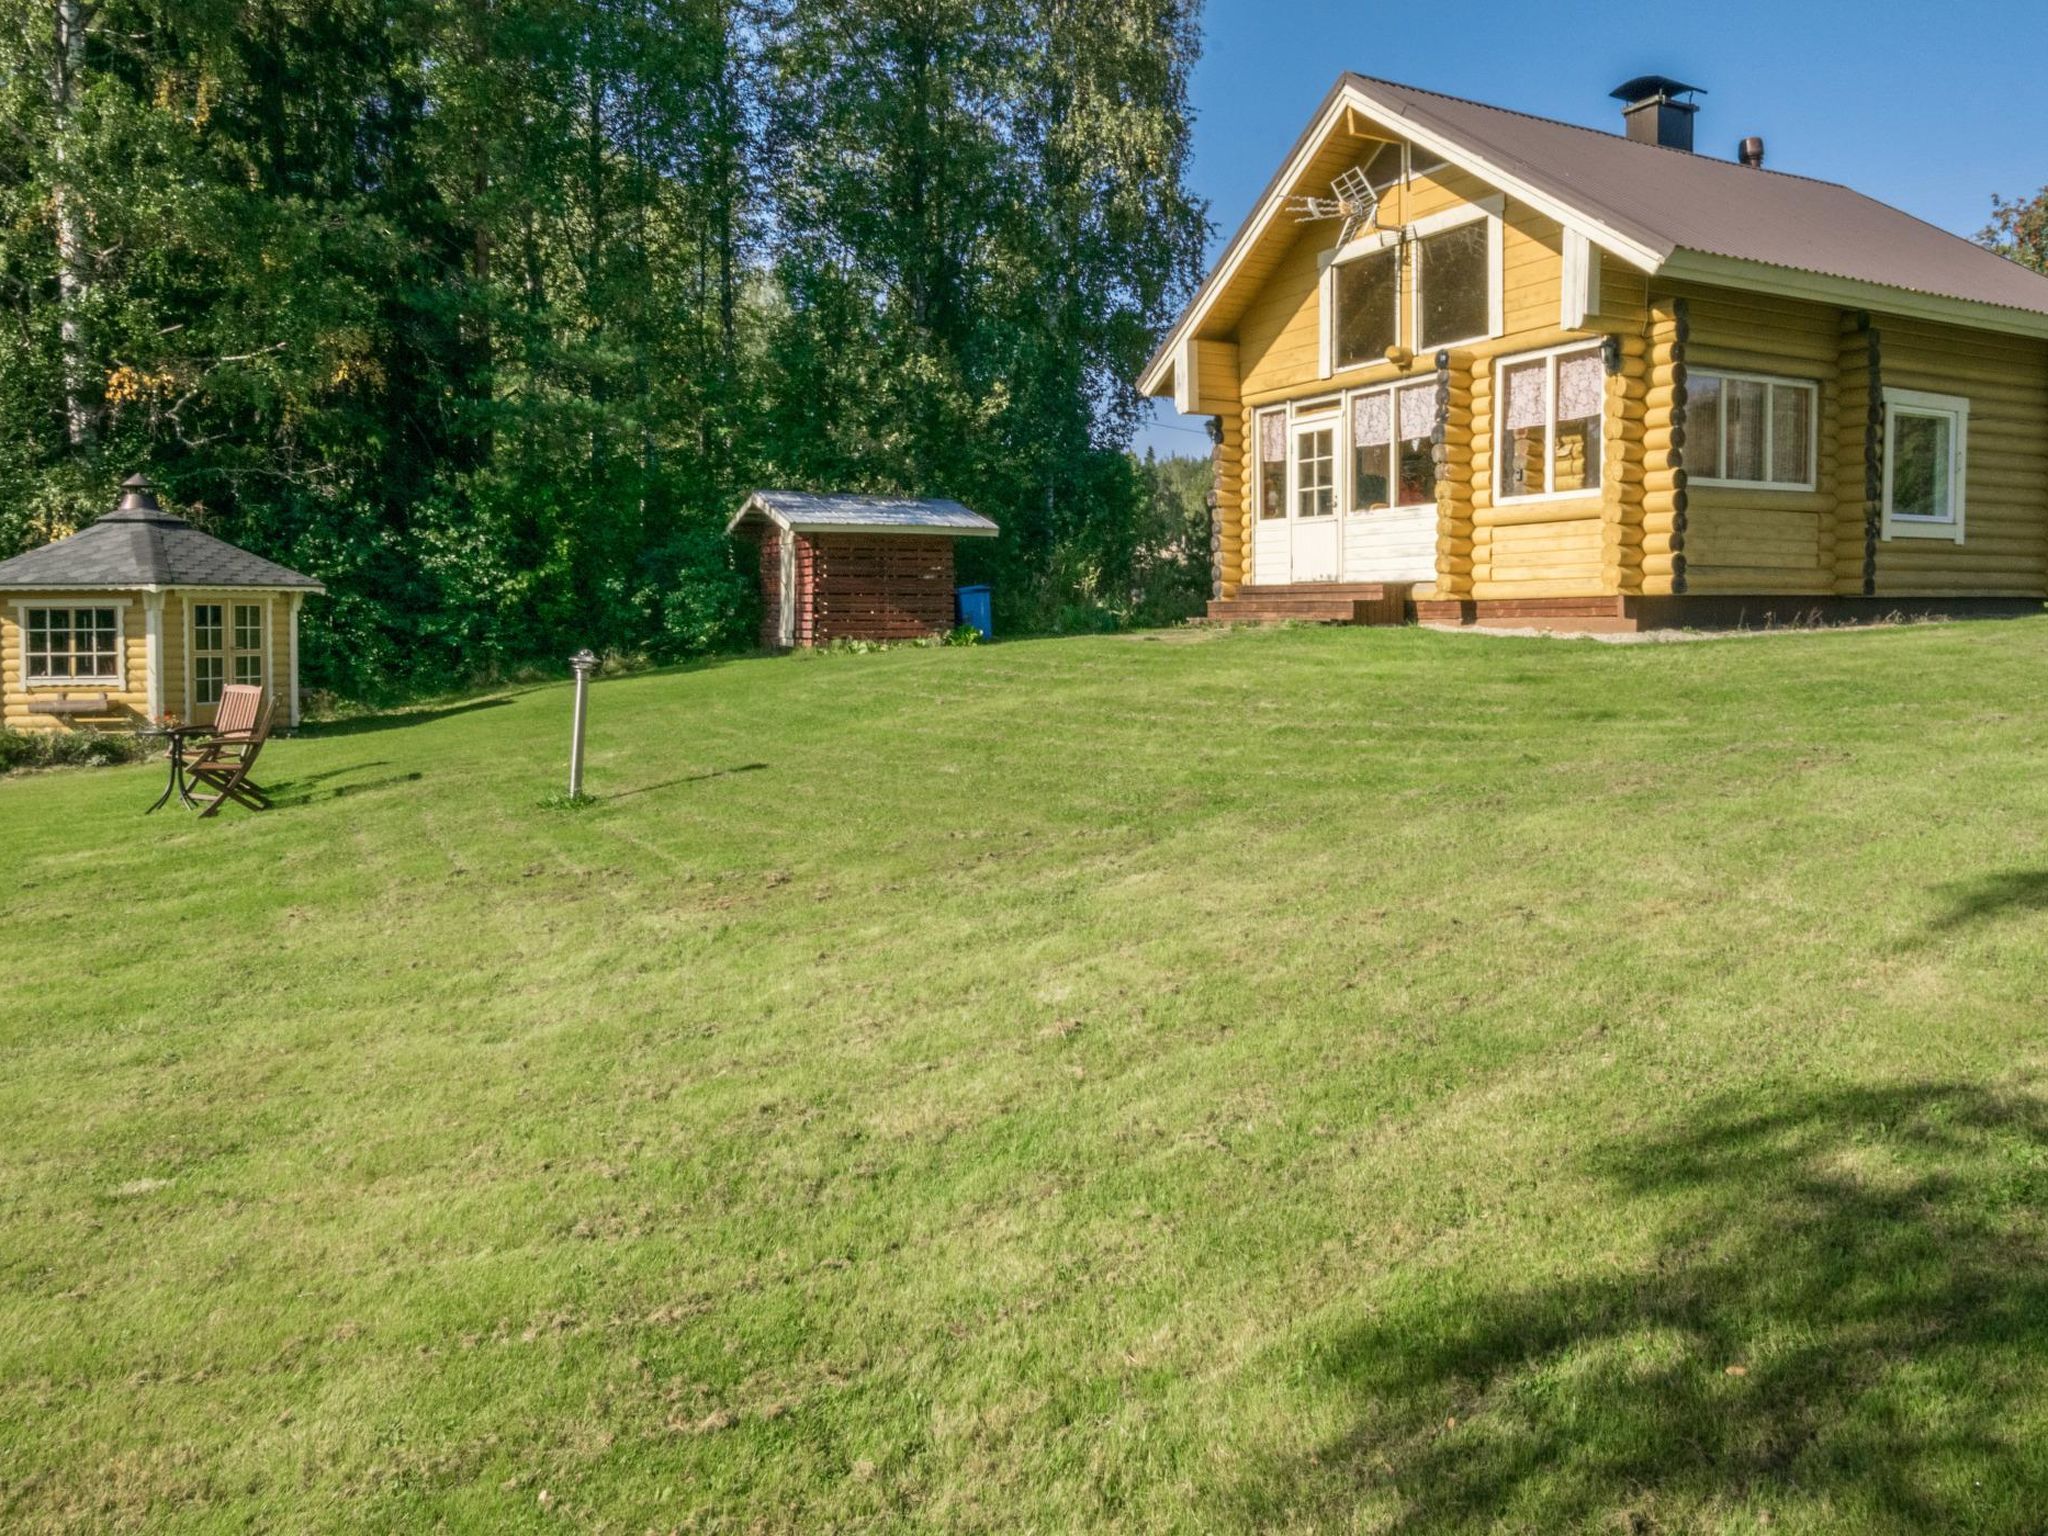 Photo 1 - 1 bedroom House in Tuusniemi with sauna